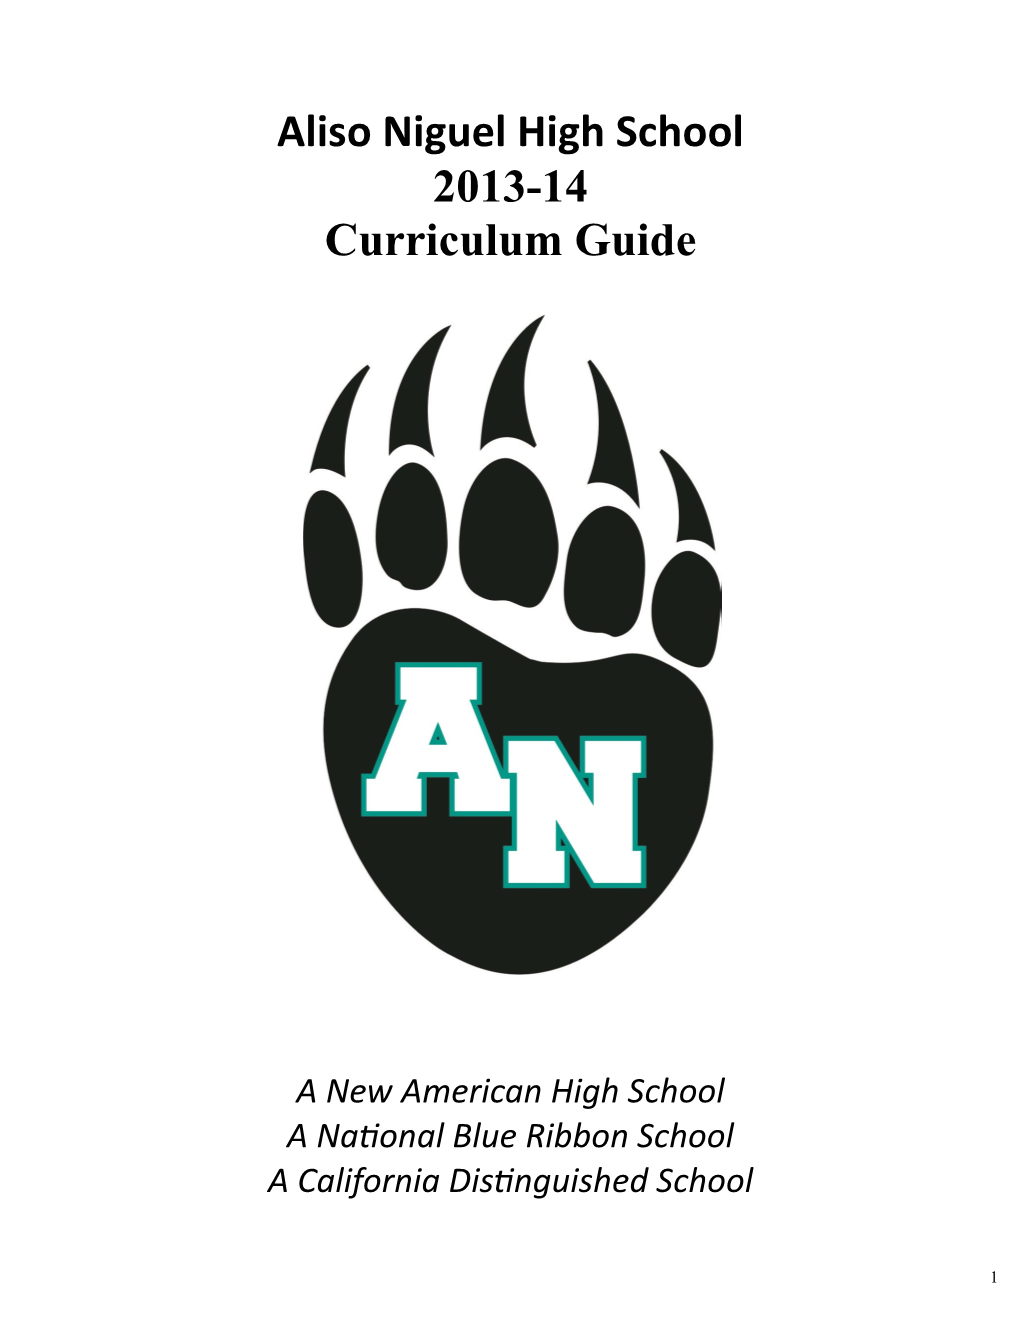 Aliso Niguel High School 2013-14 Curriculum Guide